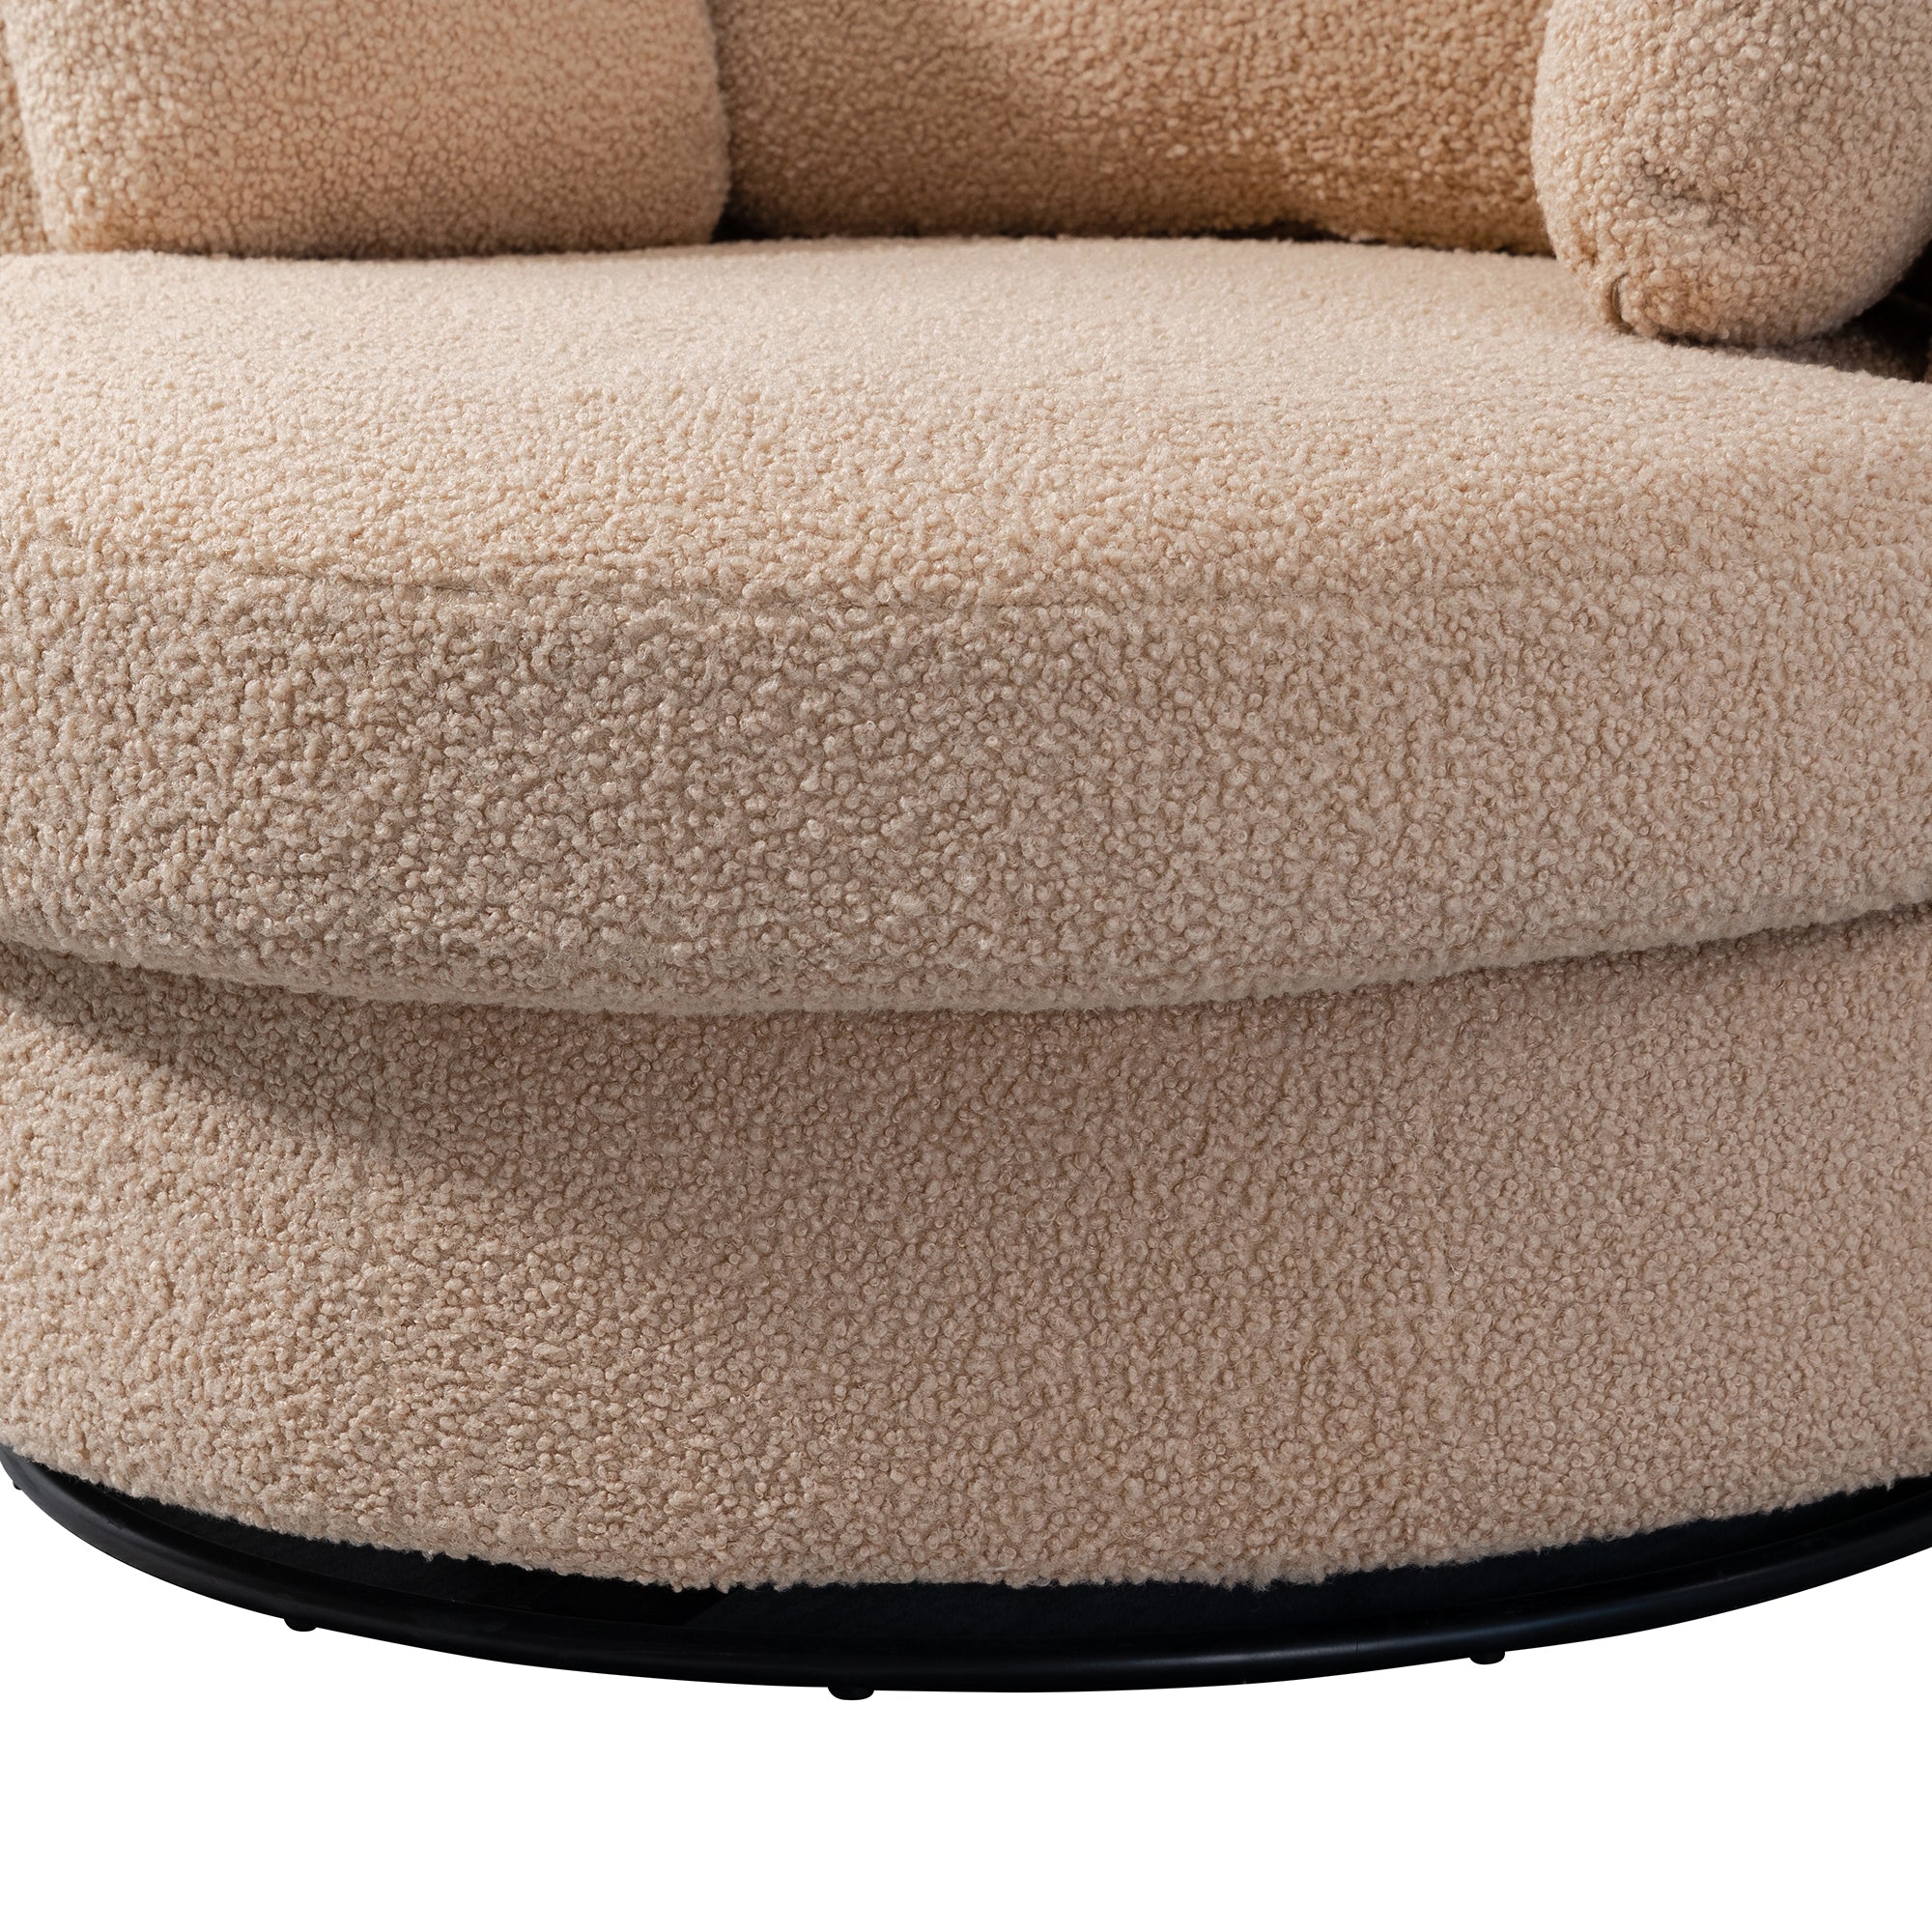 42.2" Cozy Club Chair, Swivel Barrel Chair With 3 Pillows, Swivel Round Sofa Modern Arm Chair - Light Camel